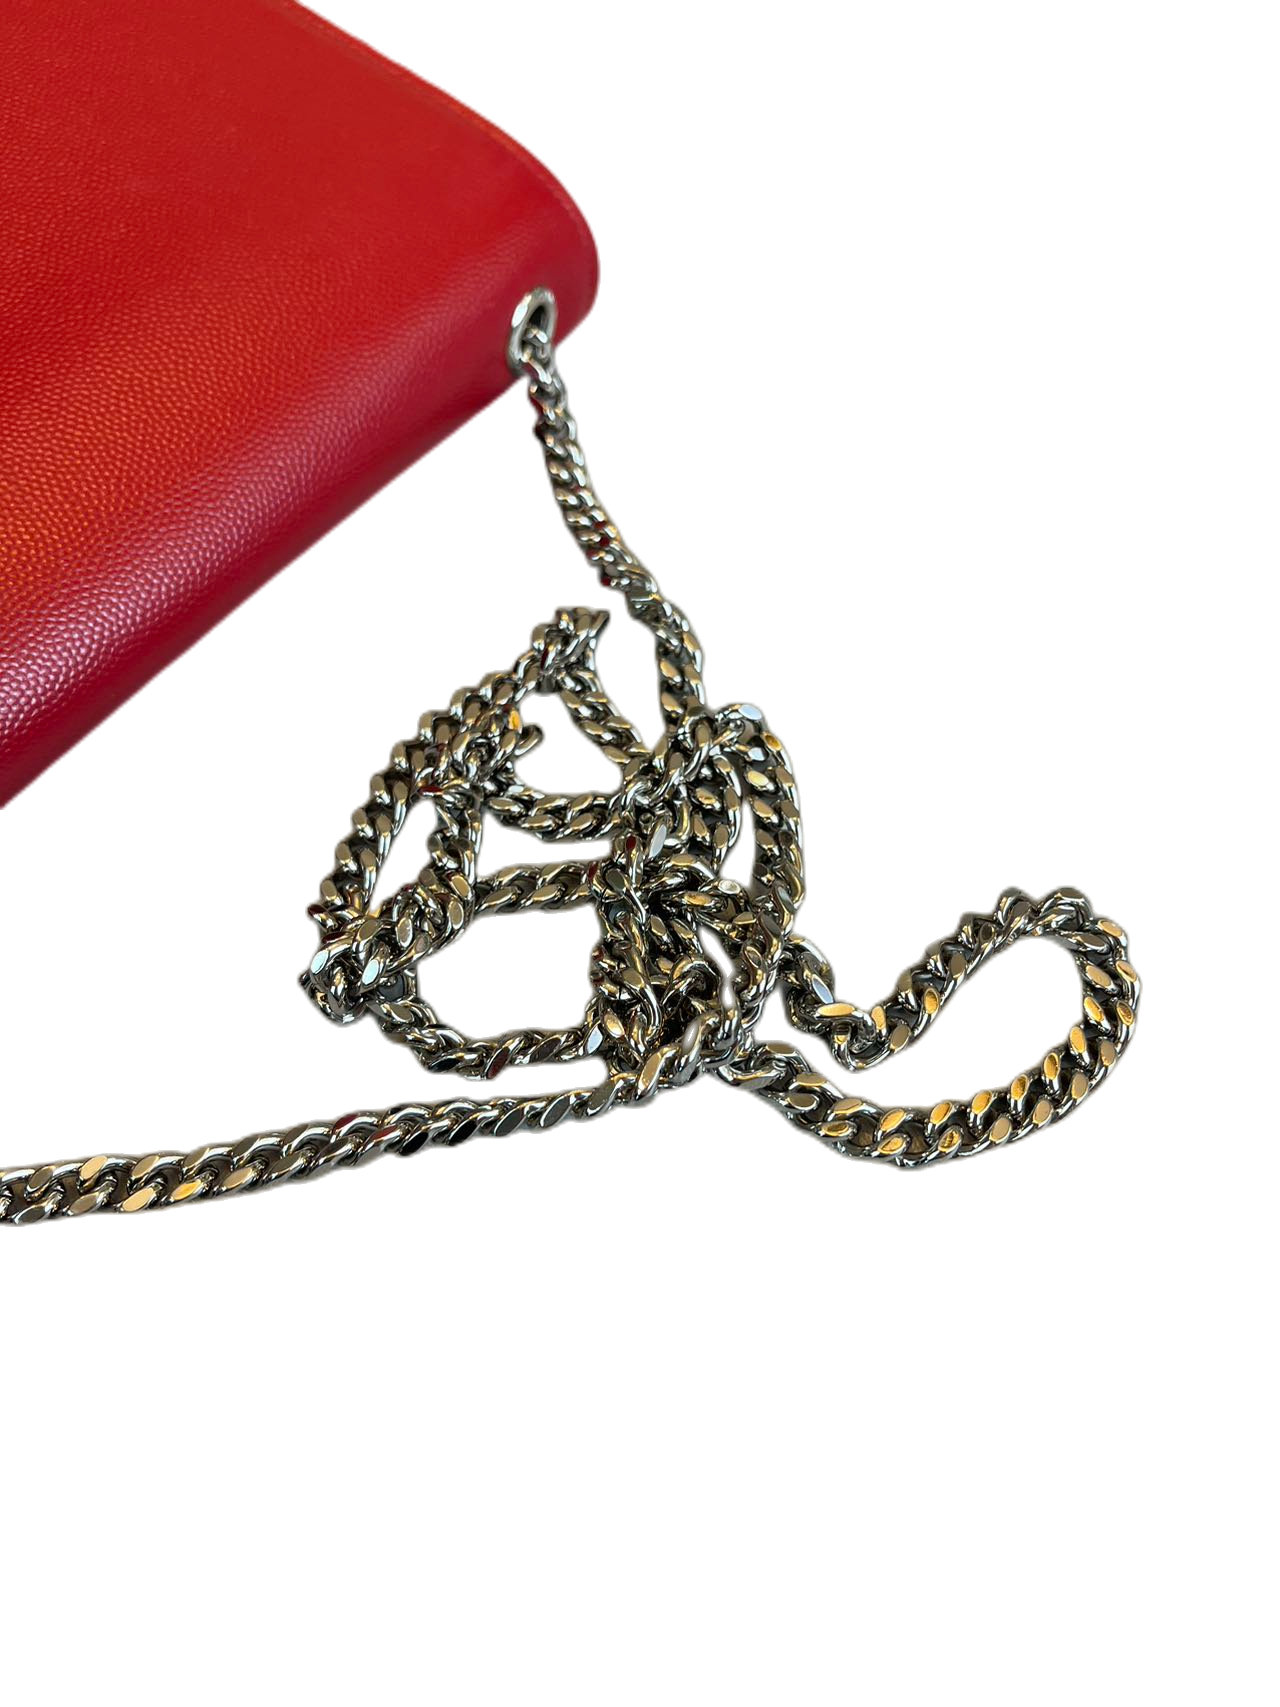 Yves Saint Laurent Monogram Kate Chain Shoulder Bag